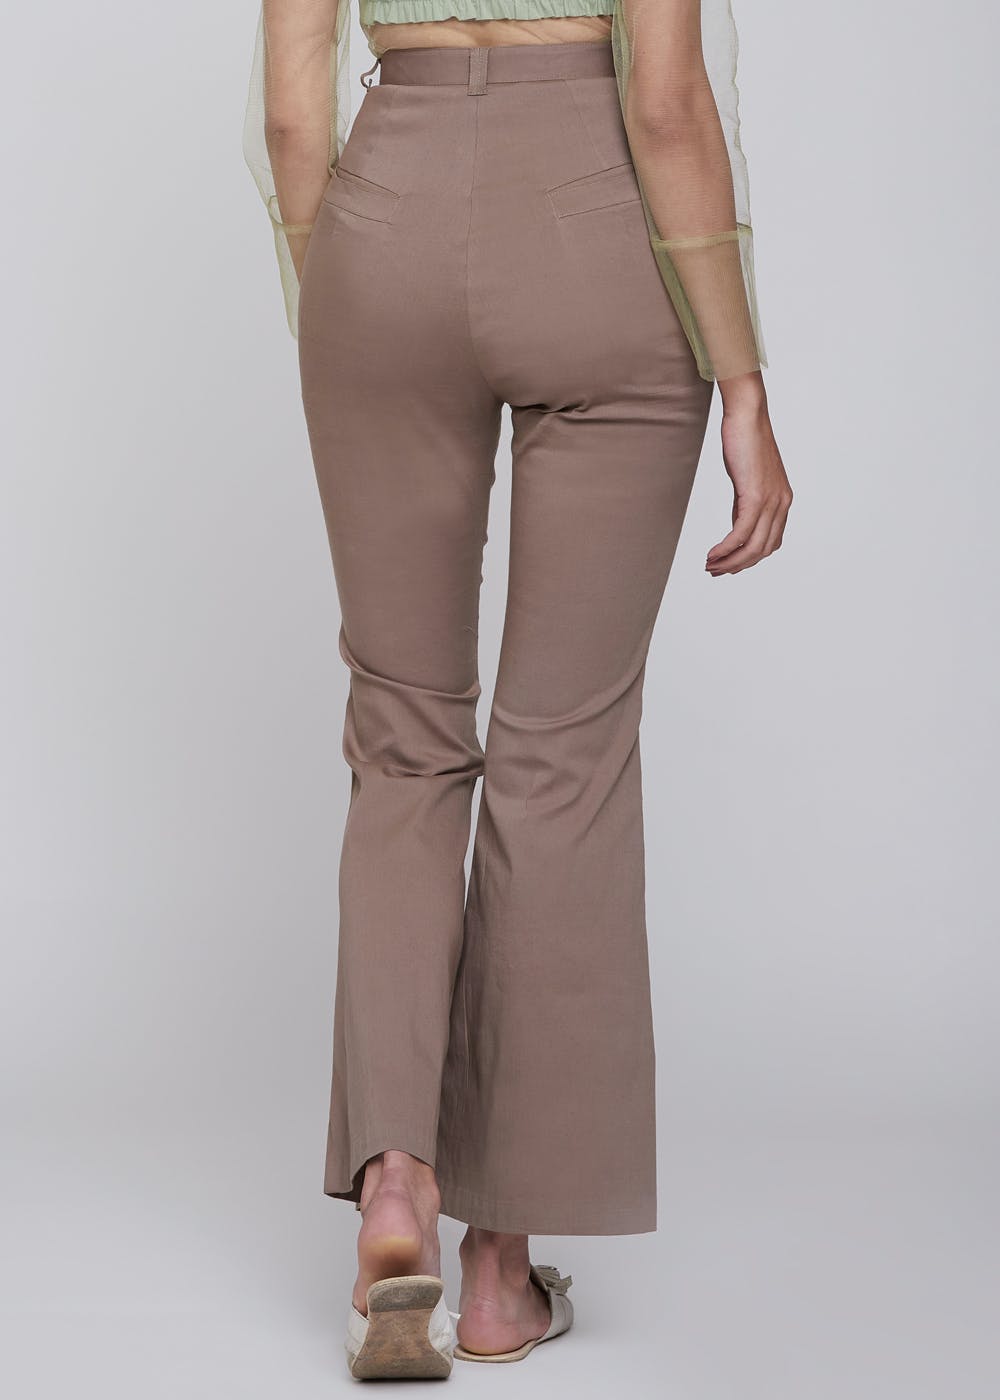 HAORUN Men Flared Formal Dress Pants Slim Fit 60s 70s Vintage Bell Bottom  Trousers - Walmart.com